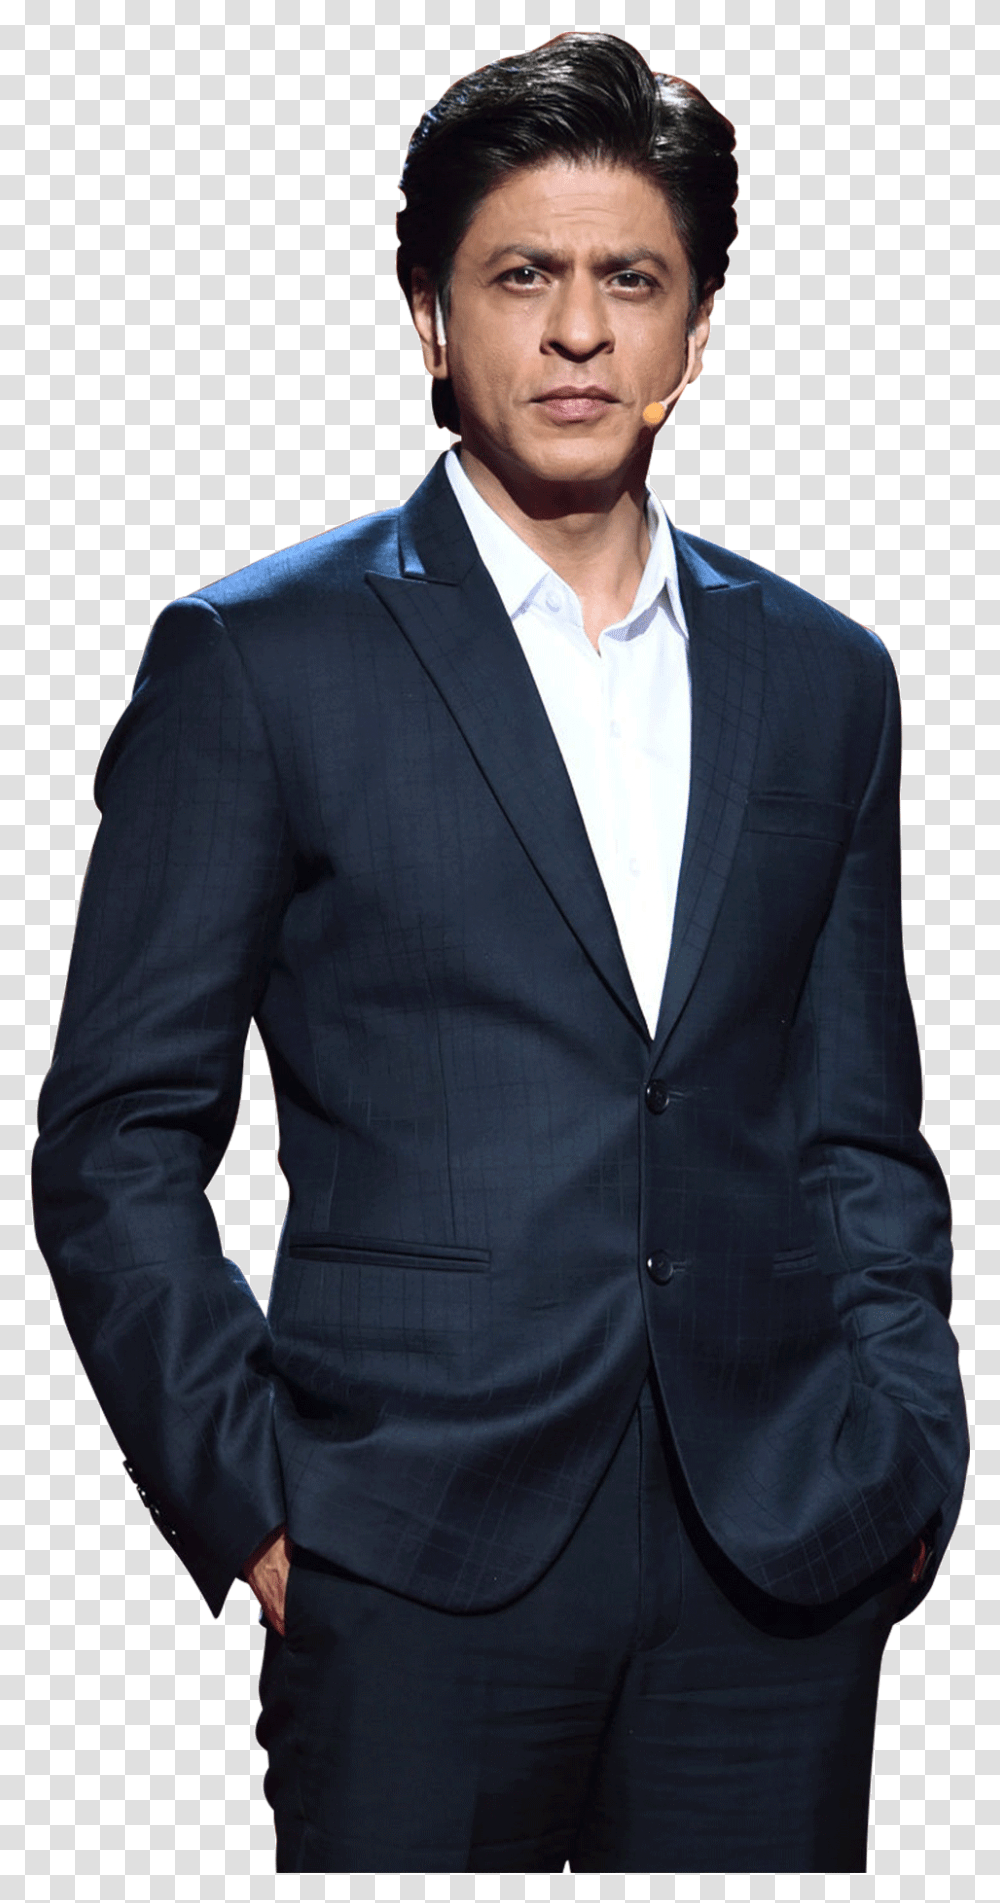 Shah Rukh Khan Image Free Download Shahrukh Khan Photo, Apparel, Suit, Overcoat Transparent Png